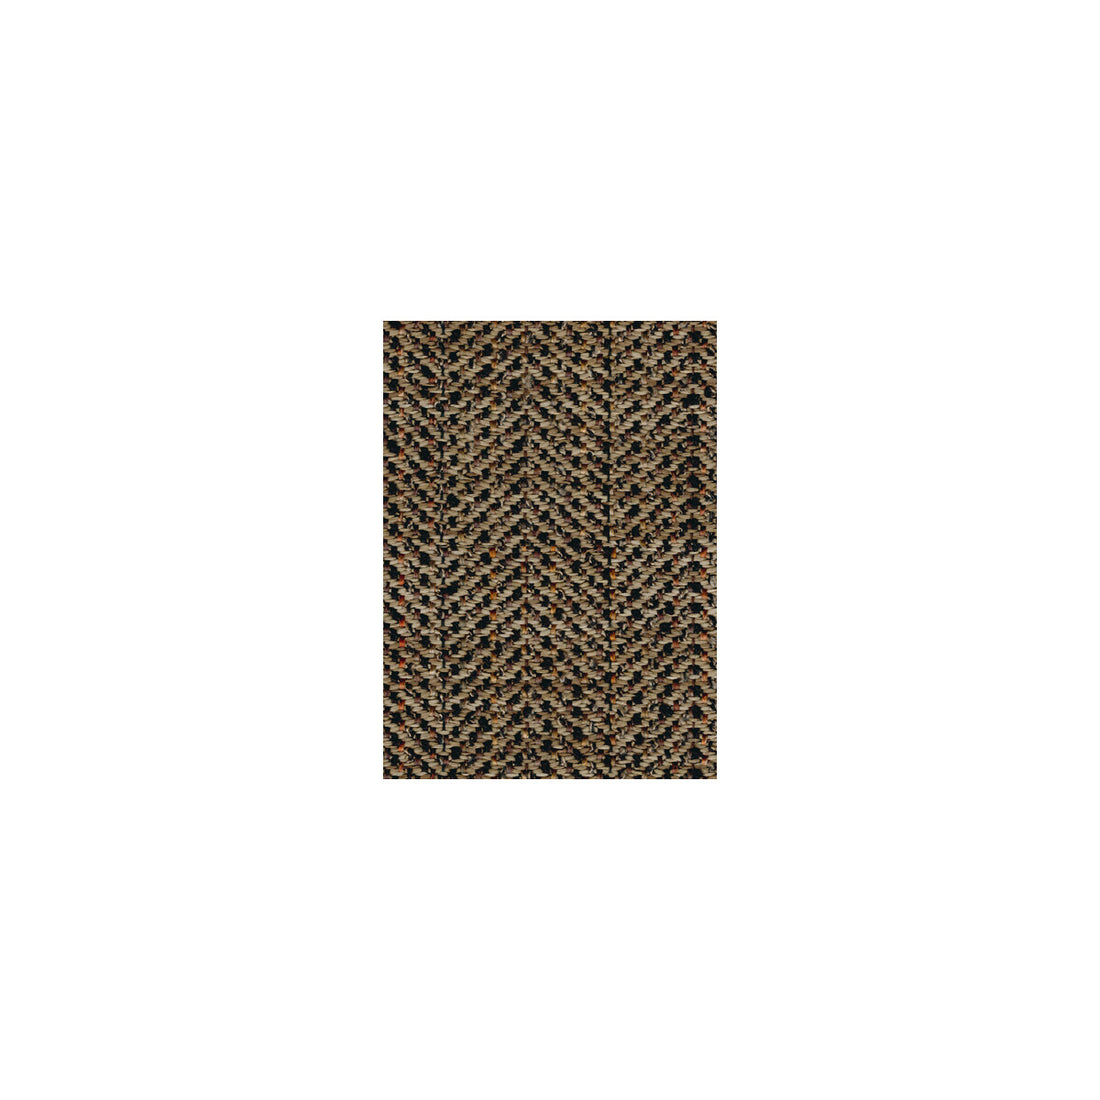 Kravet Smart fabric in 30666-821 color - pattern 30666.821.0 - by Kravet Smart